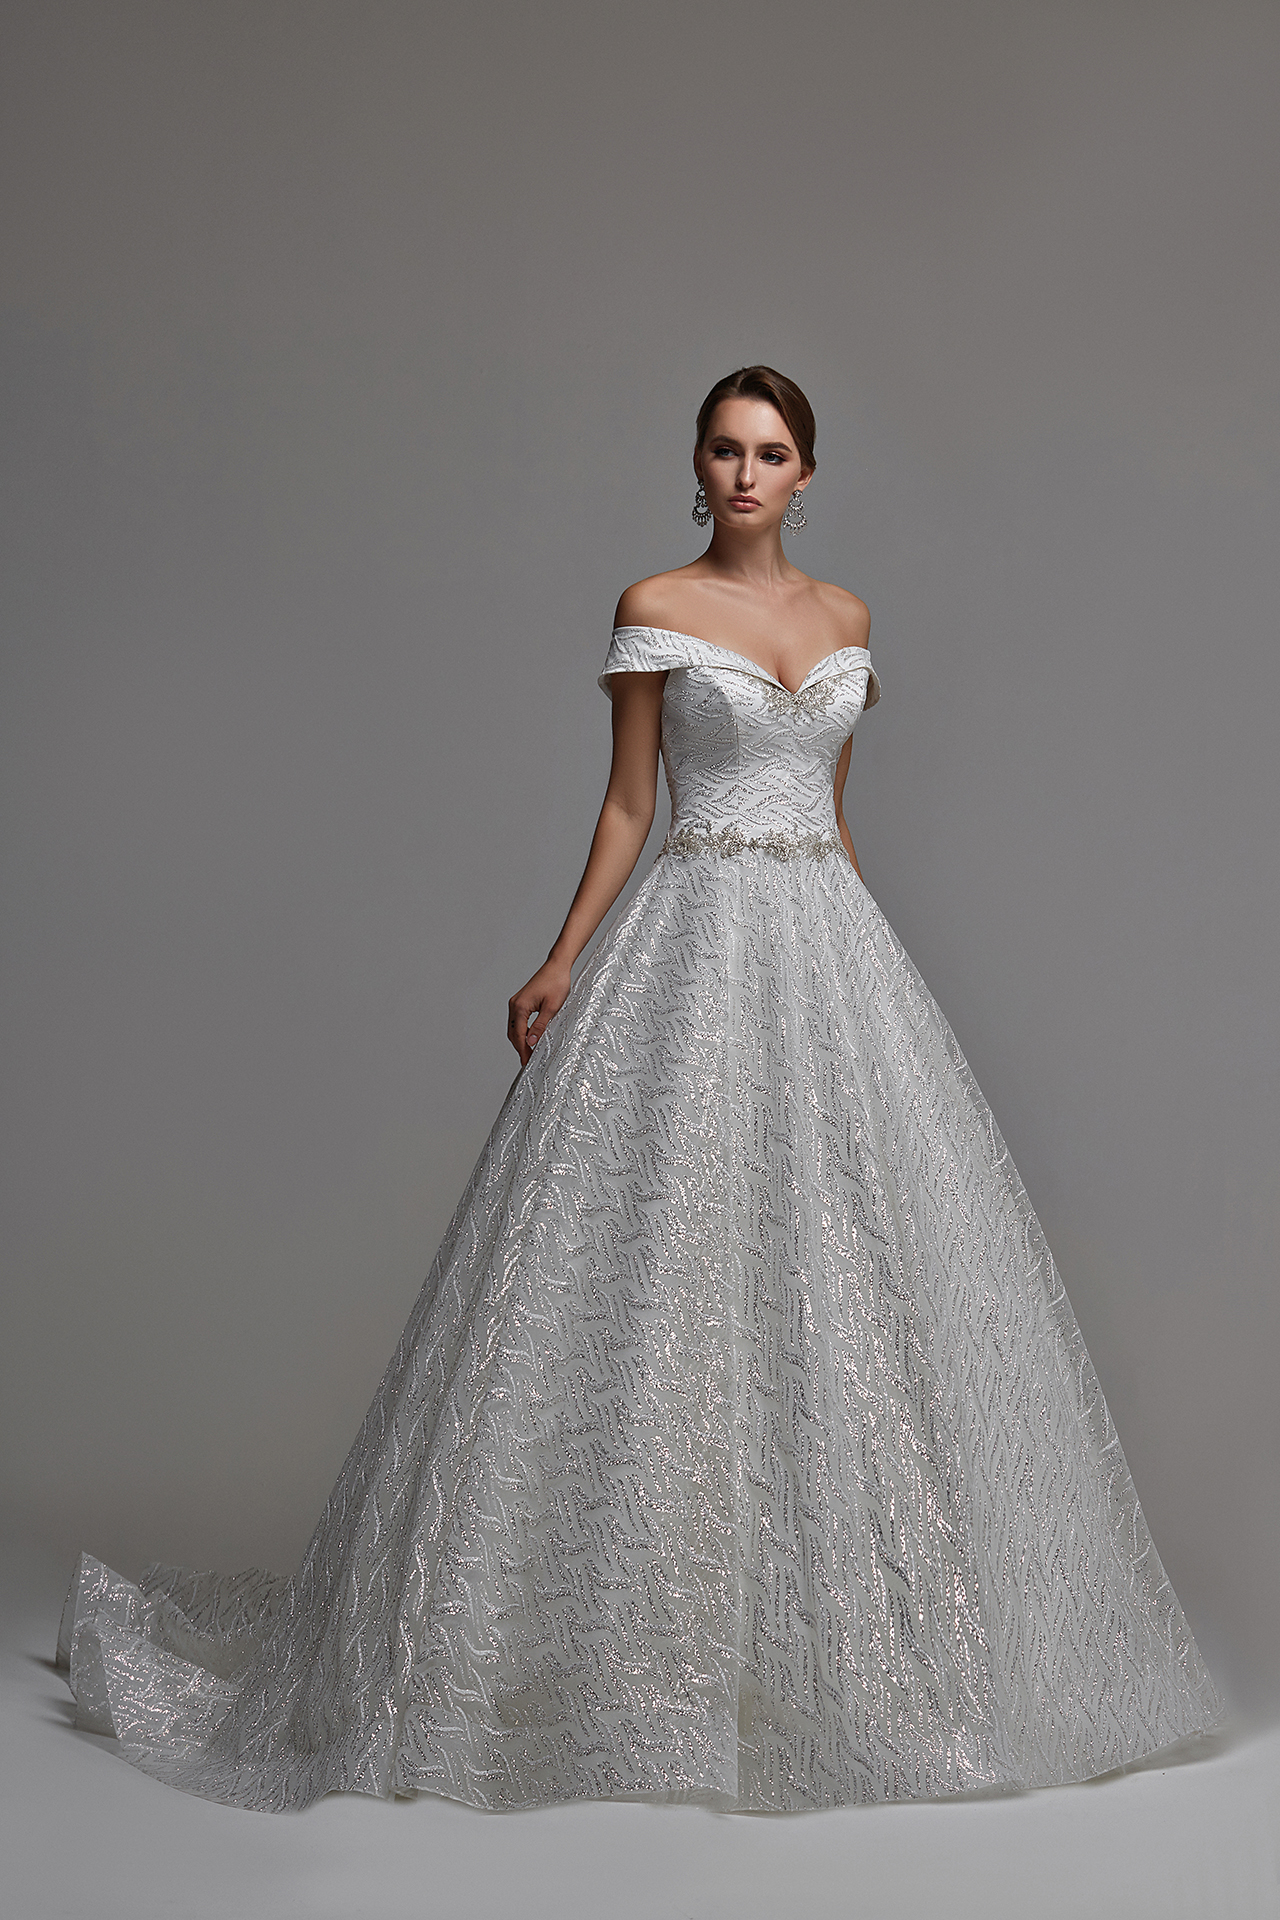 Sparkly ballgown wedding dress lace, Shiny satin wedding dress, Elegant tulle ballgown wedding dress, Nicole